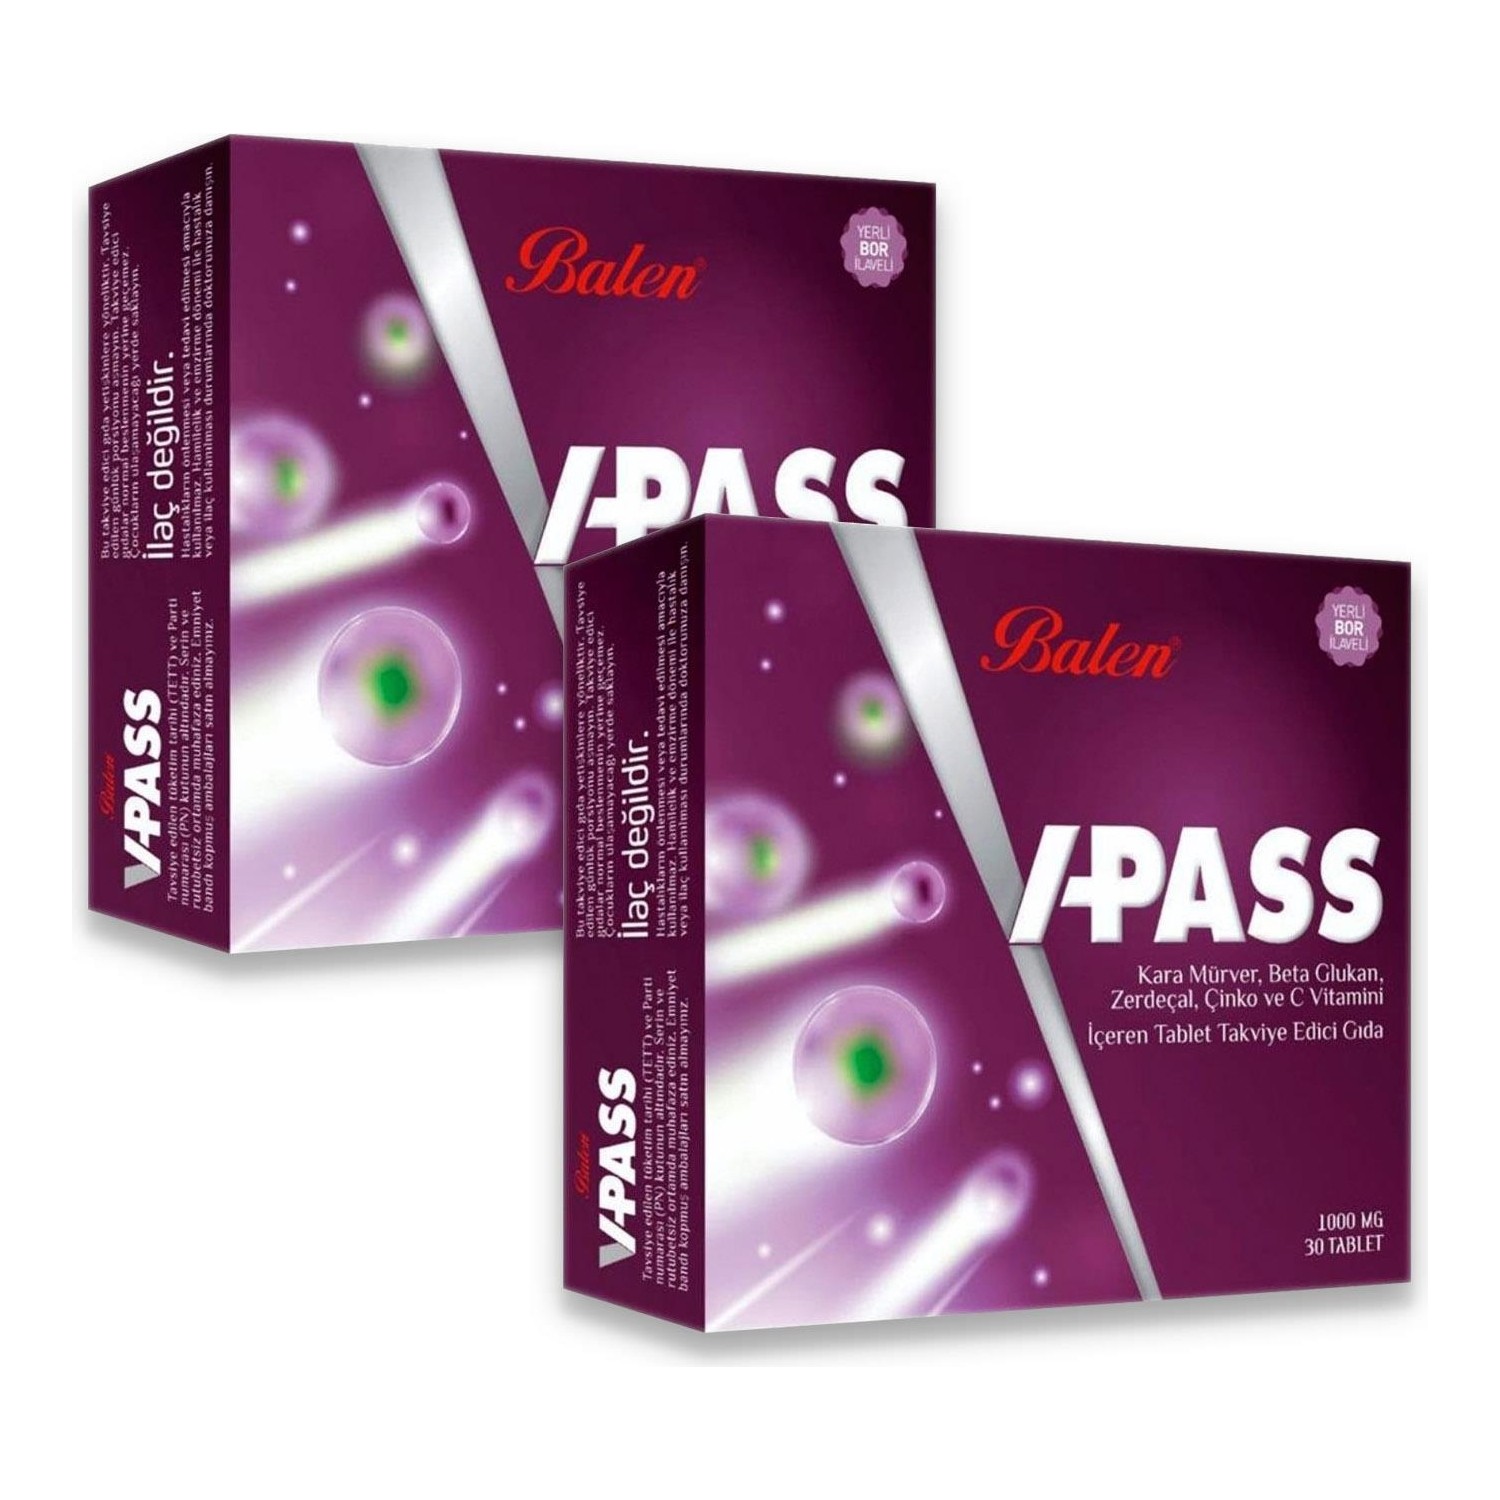 Пищевая добавка Balen VPA-Ss 1000 мг, 2 упаковки по 30 таблеток фотографии